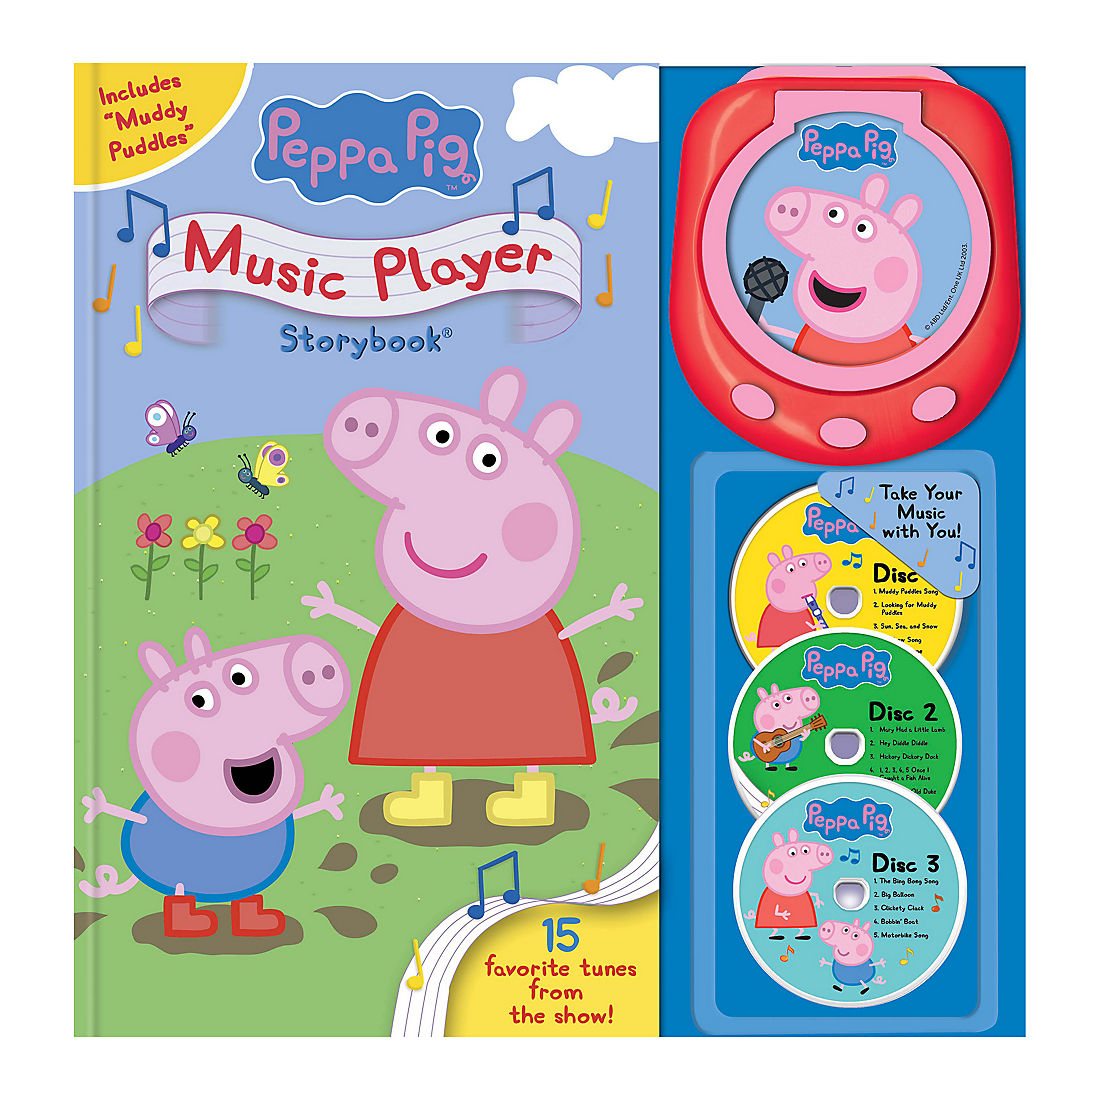 Peppa Pig: Music Player - BJs Wholesale Club